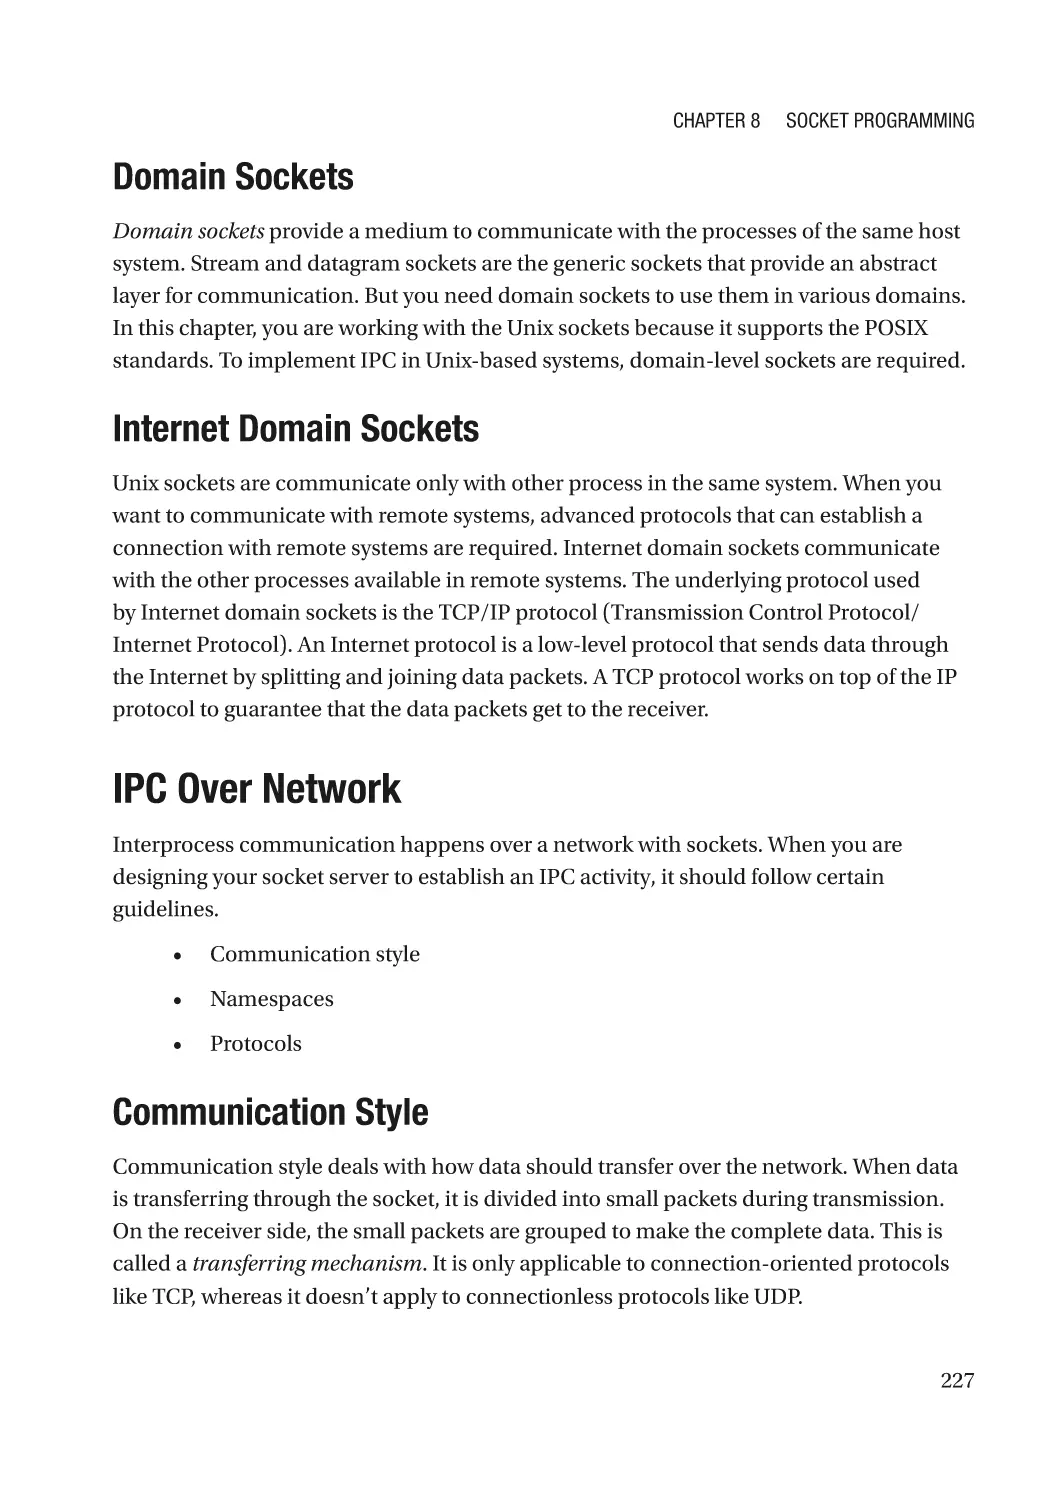 Domain Sockets
Internet Domain Sockets
IPC Over Network
Communication Style